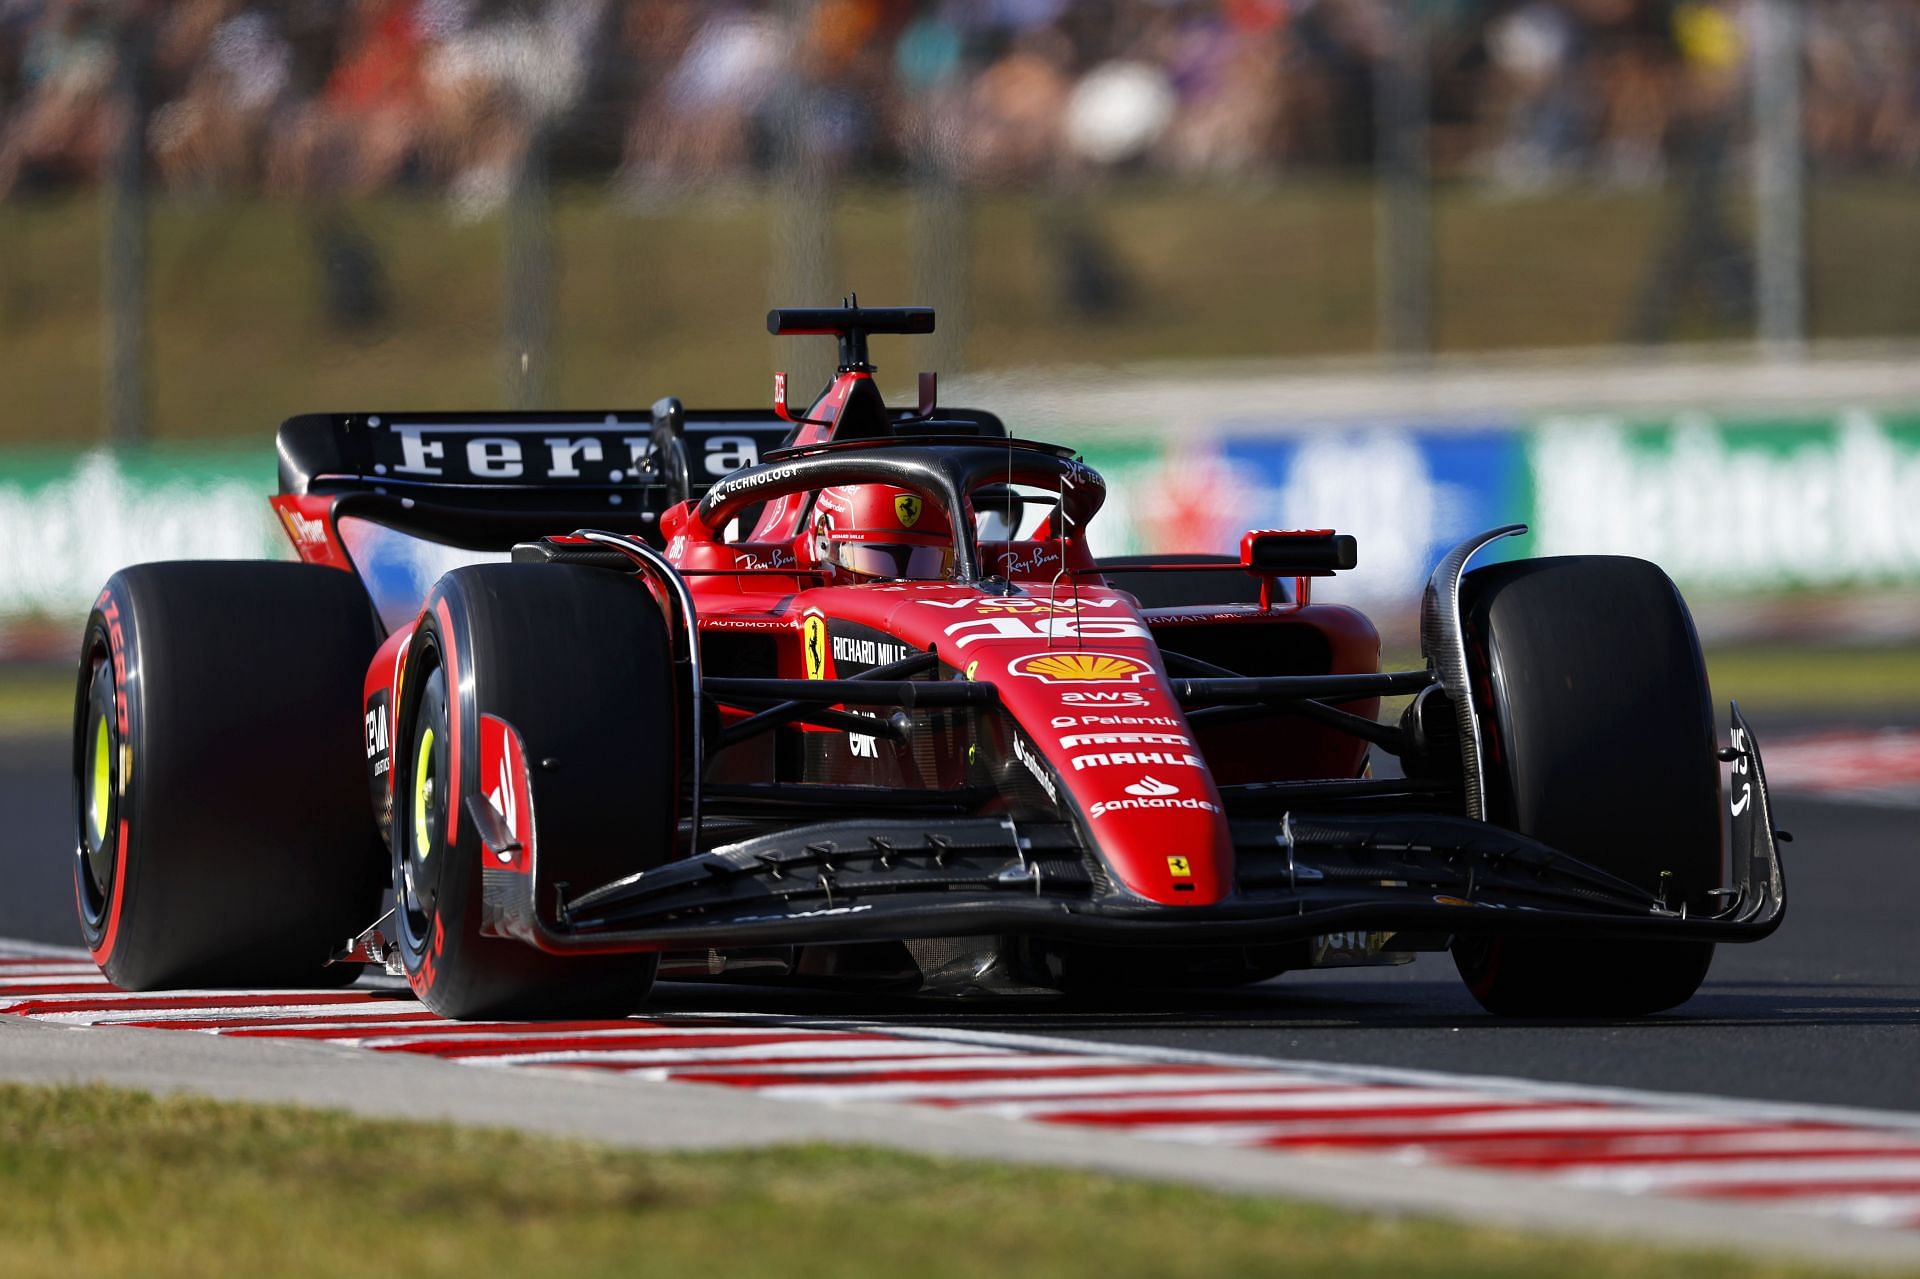 F1 Grand Prix of Hungary - Qualifying